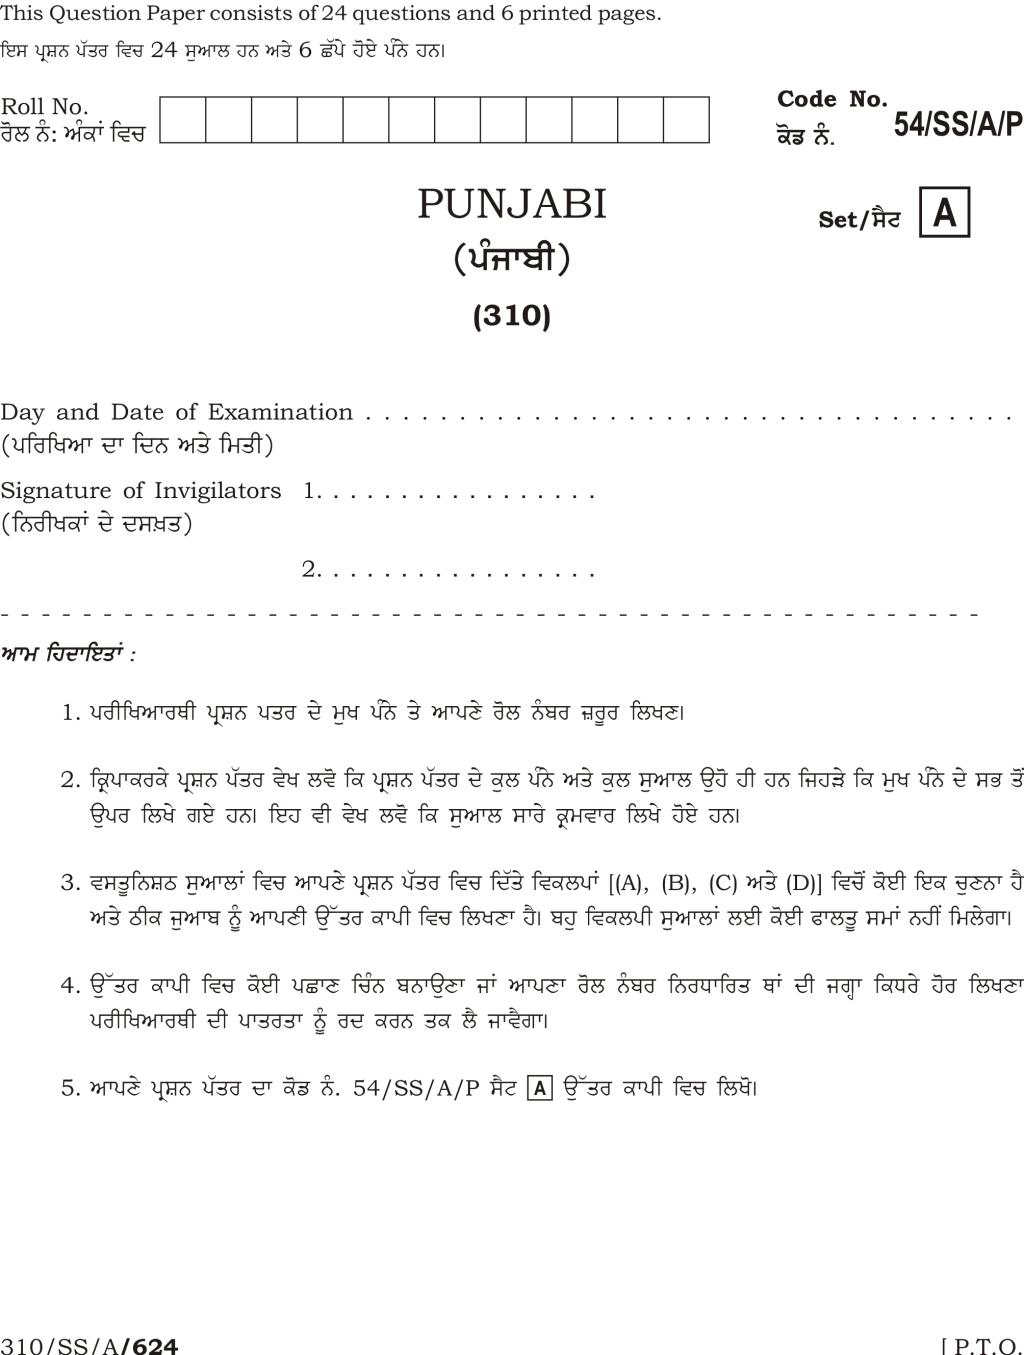 NIOS Class 12 Question Paper Apr 2017 - Punjabi - Page 1